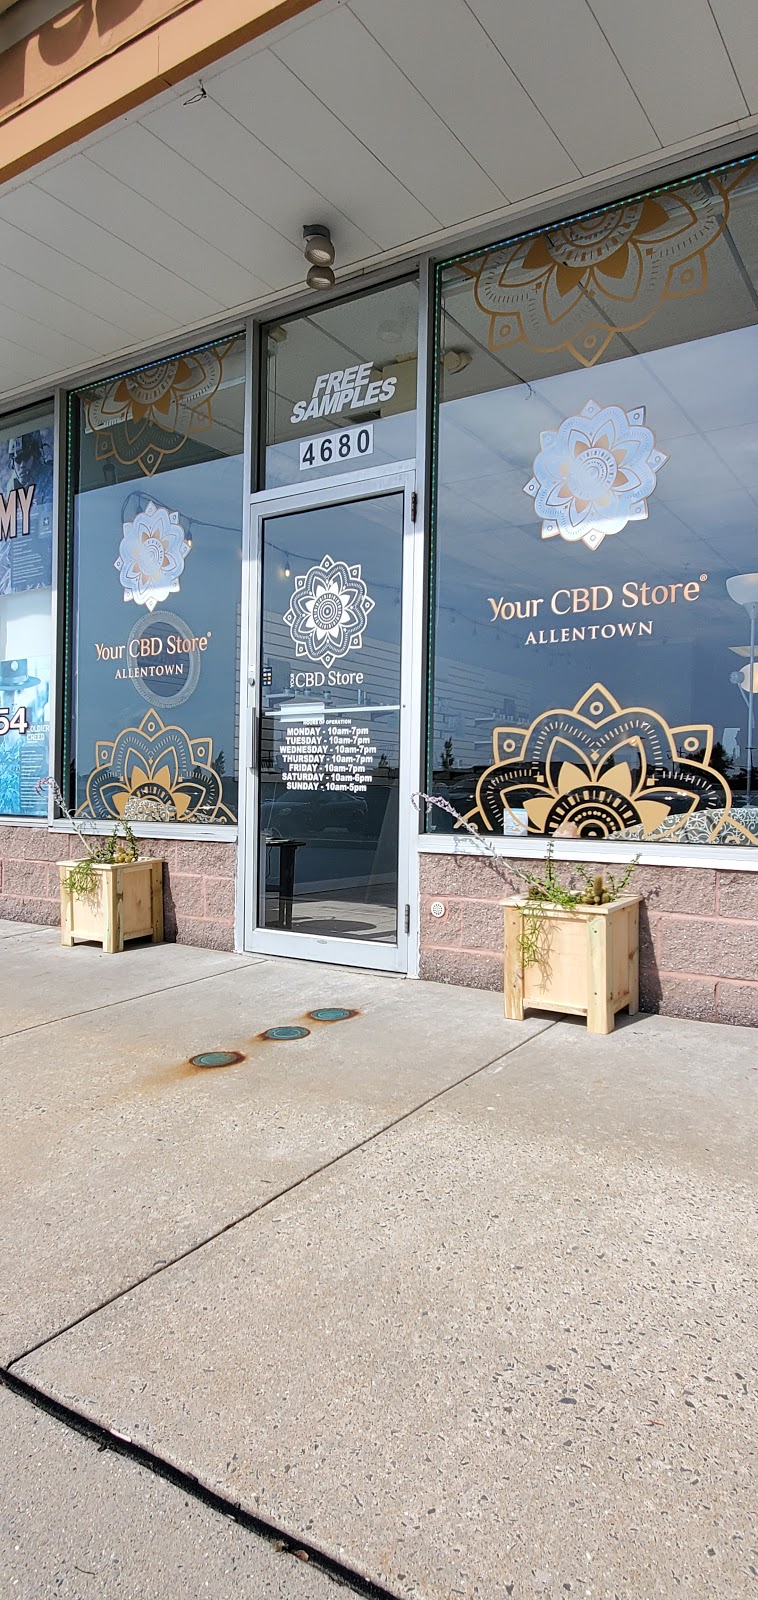 Your CBD Store - Allentown, PA